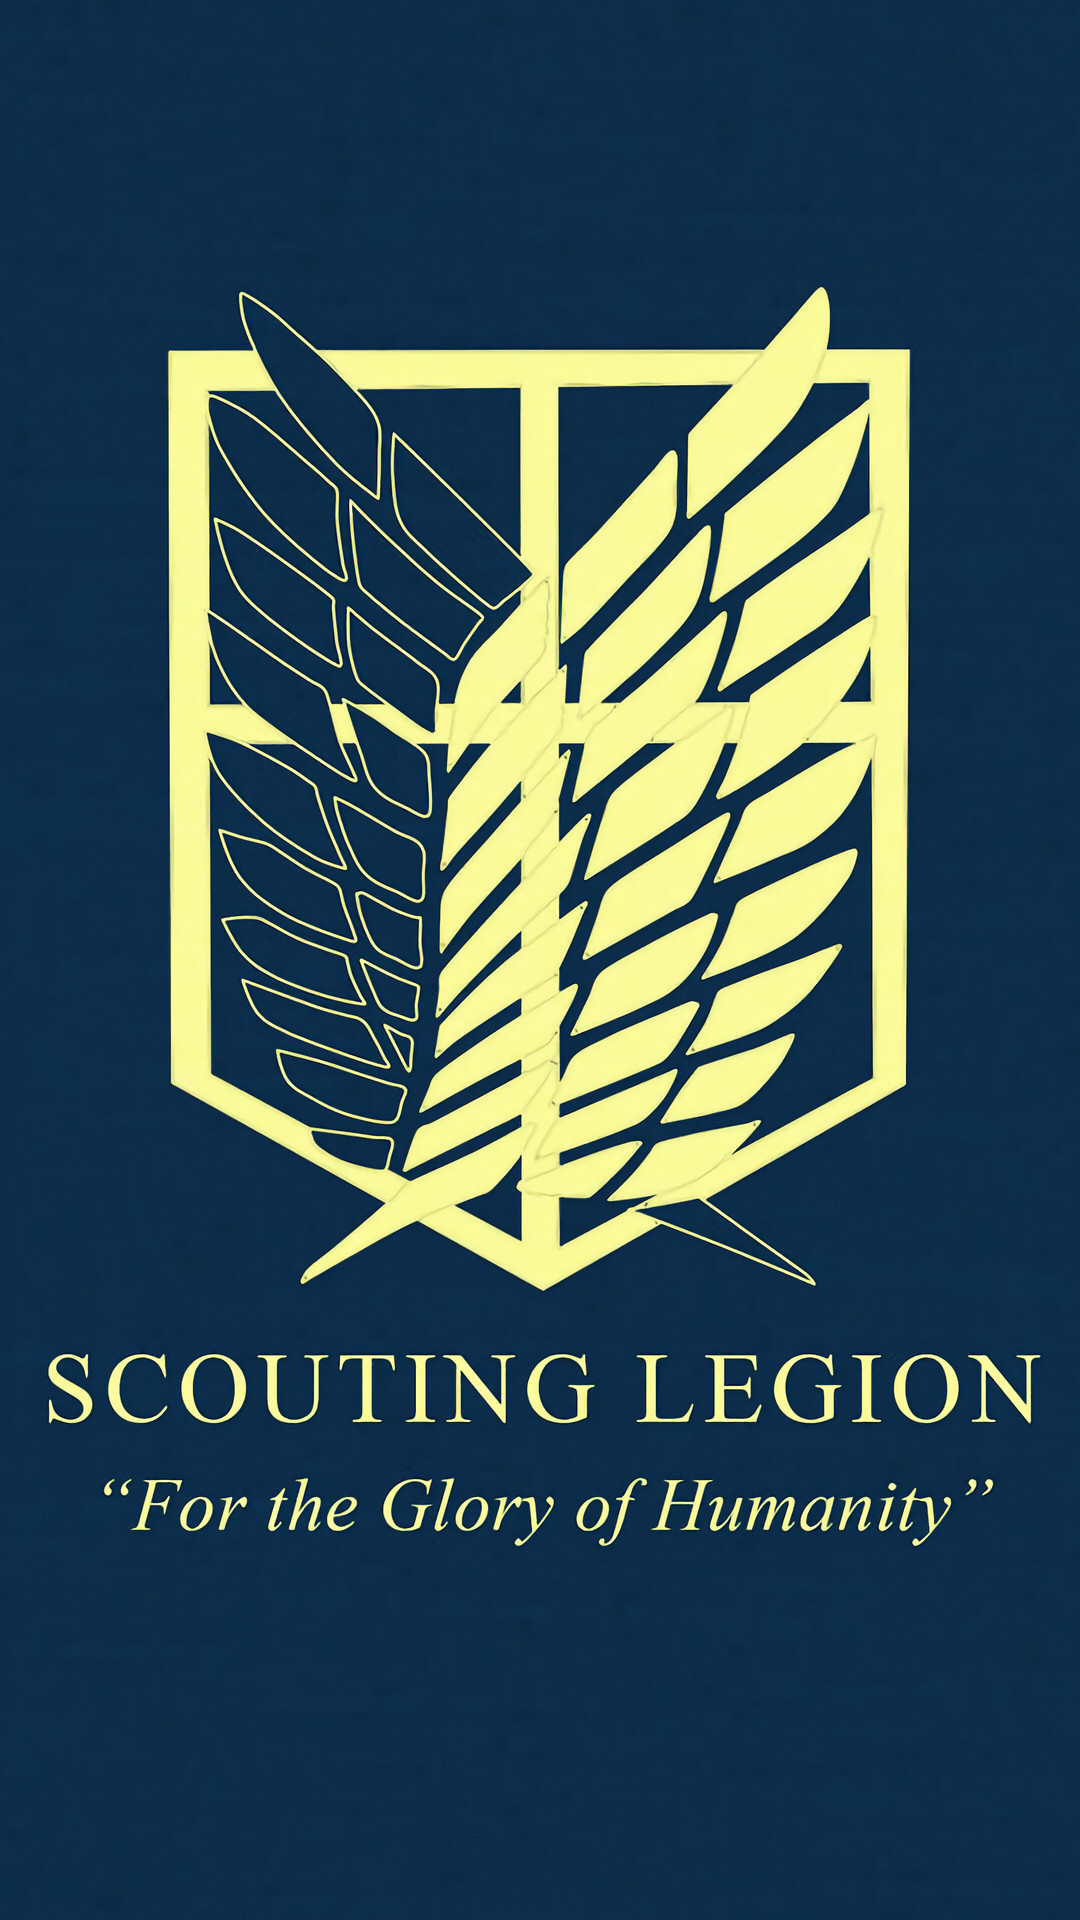 Scouting Legion Wallpaper Image